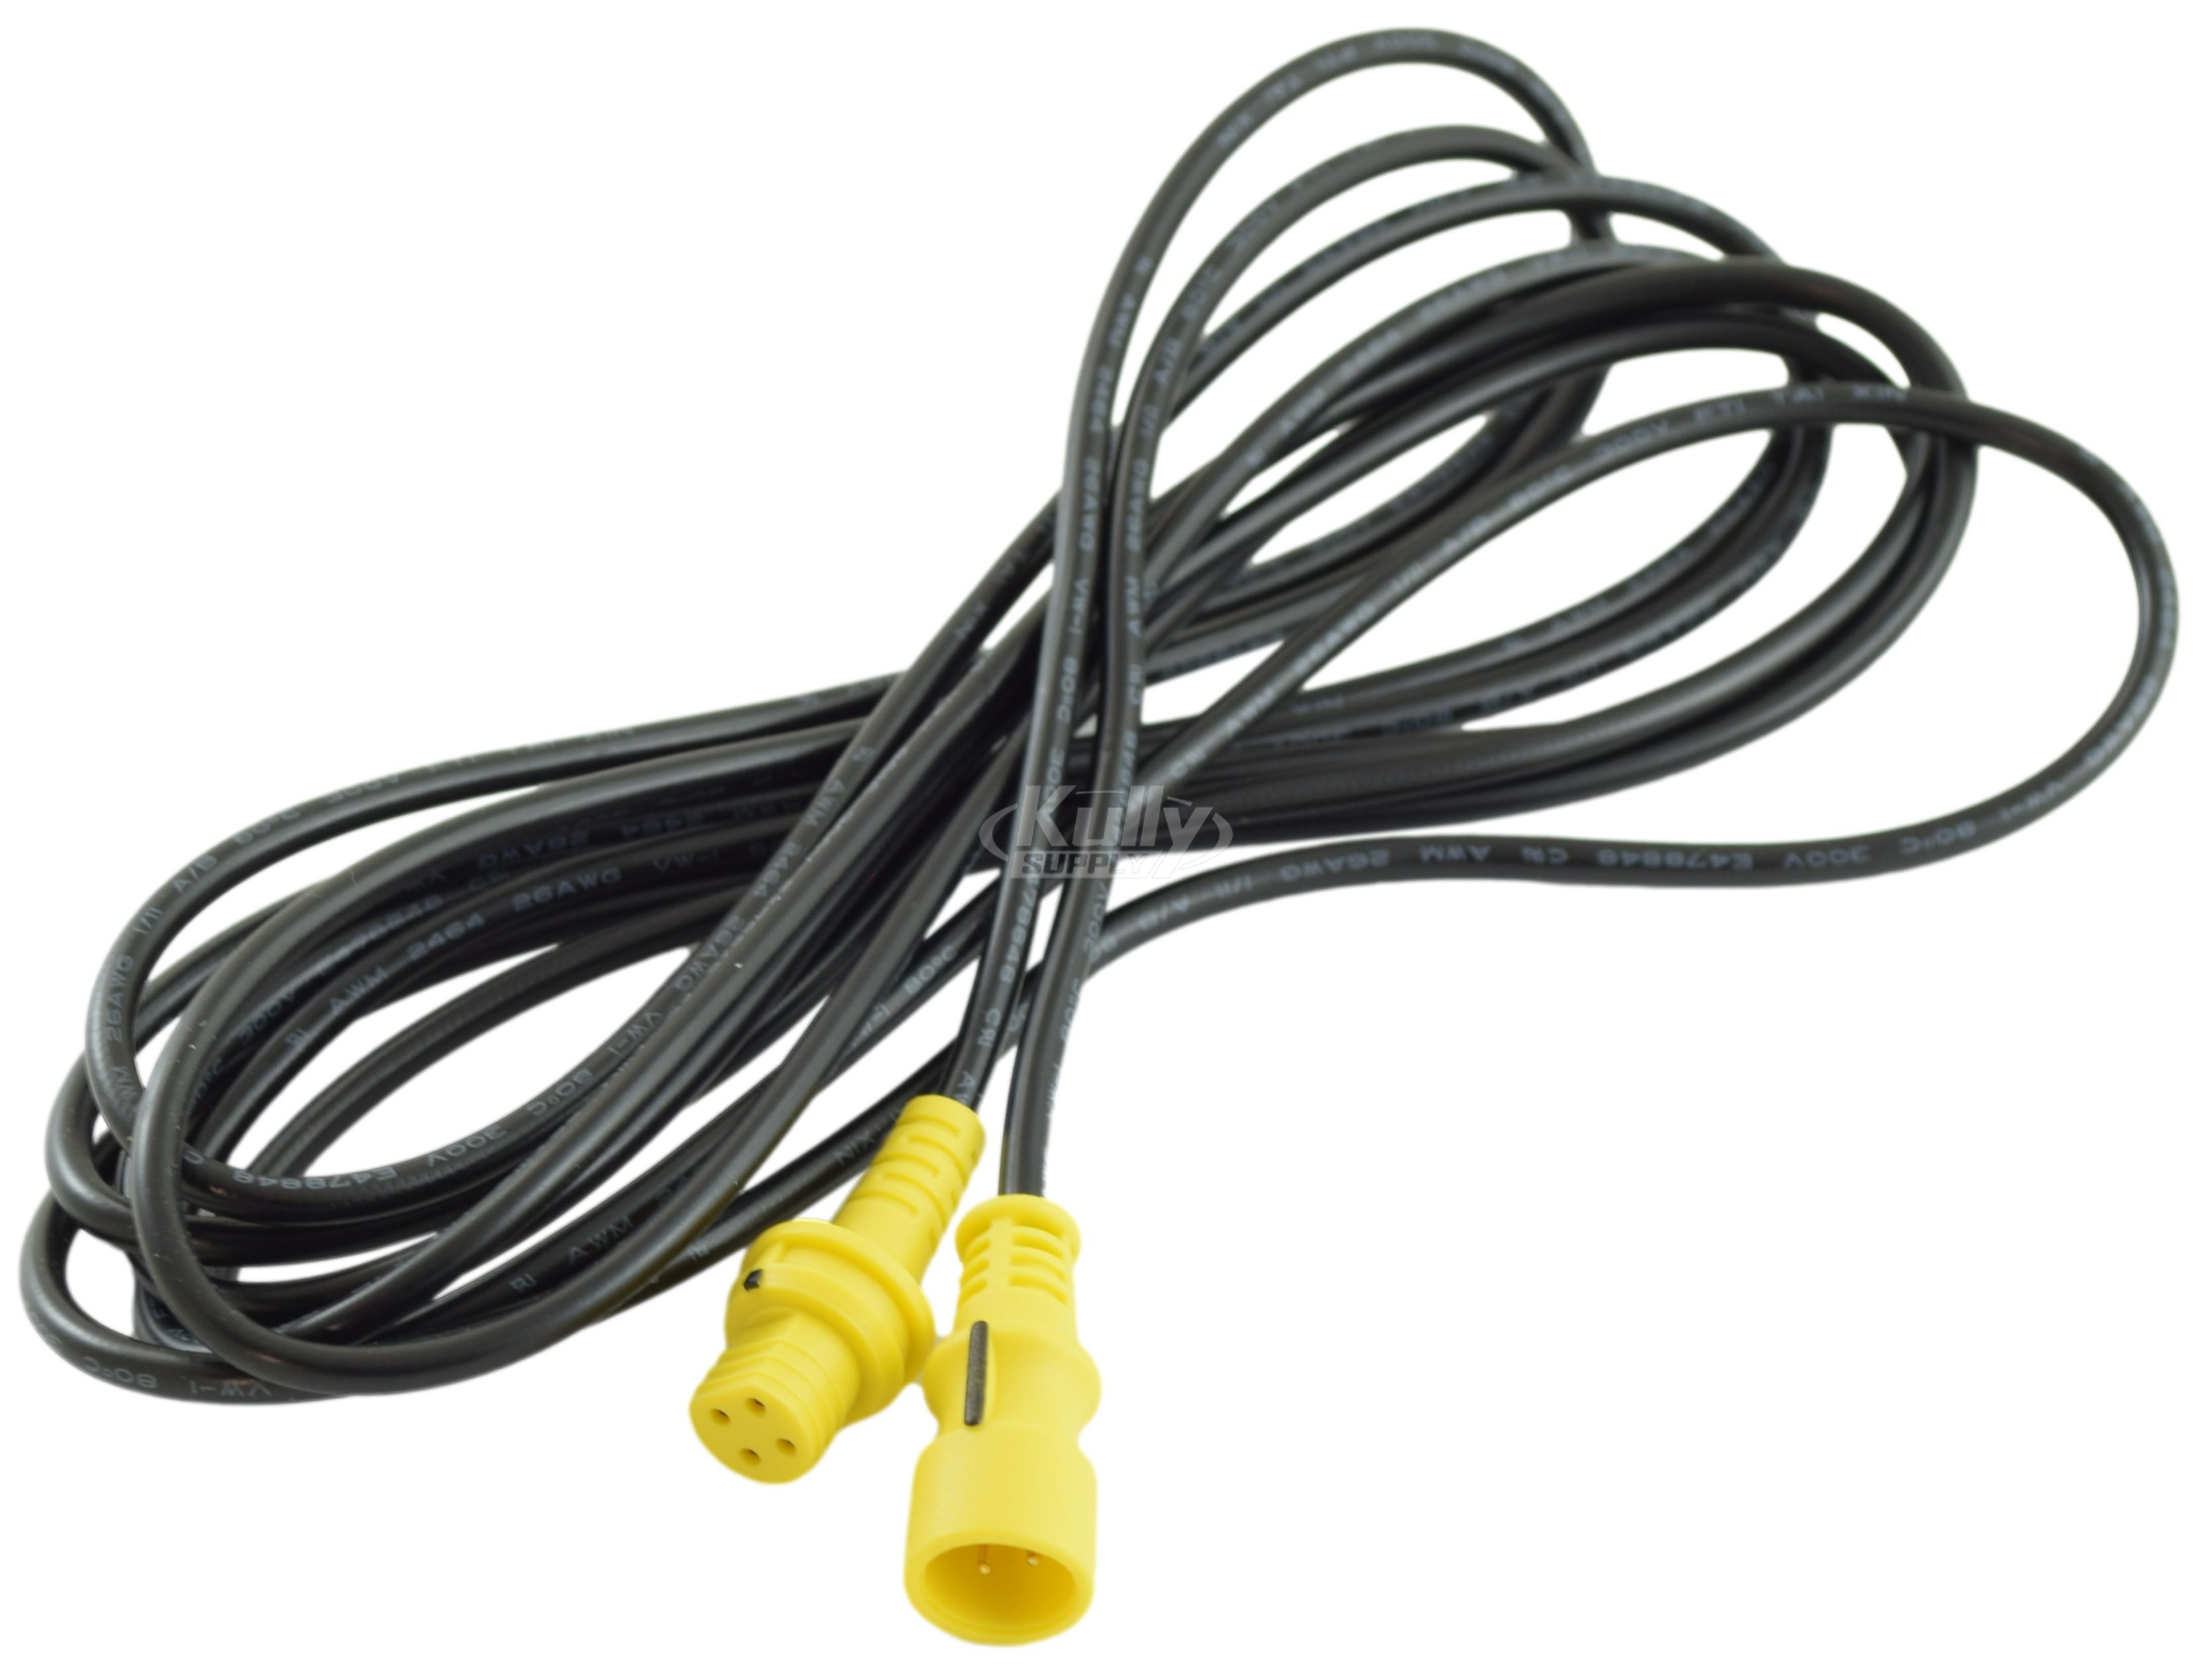 Sloan EFP-113-A Sensor Extension Cable